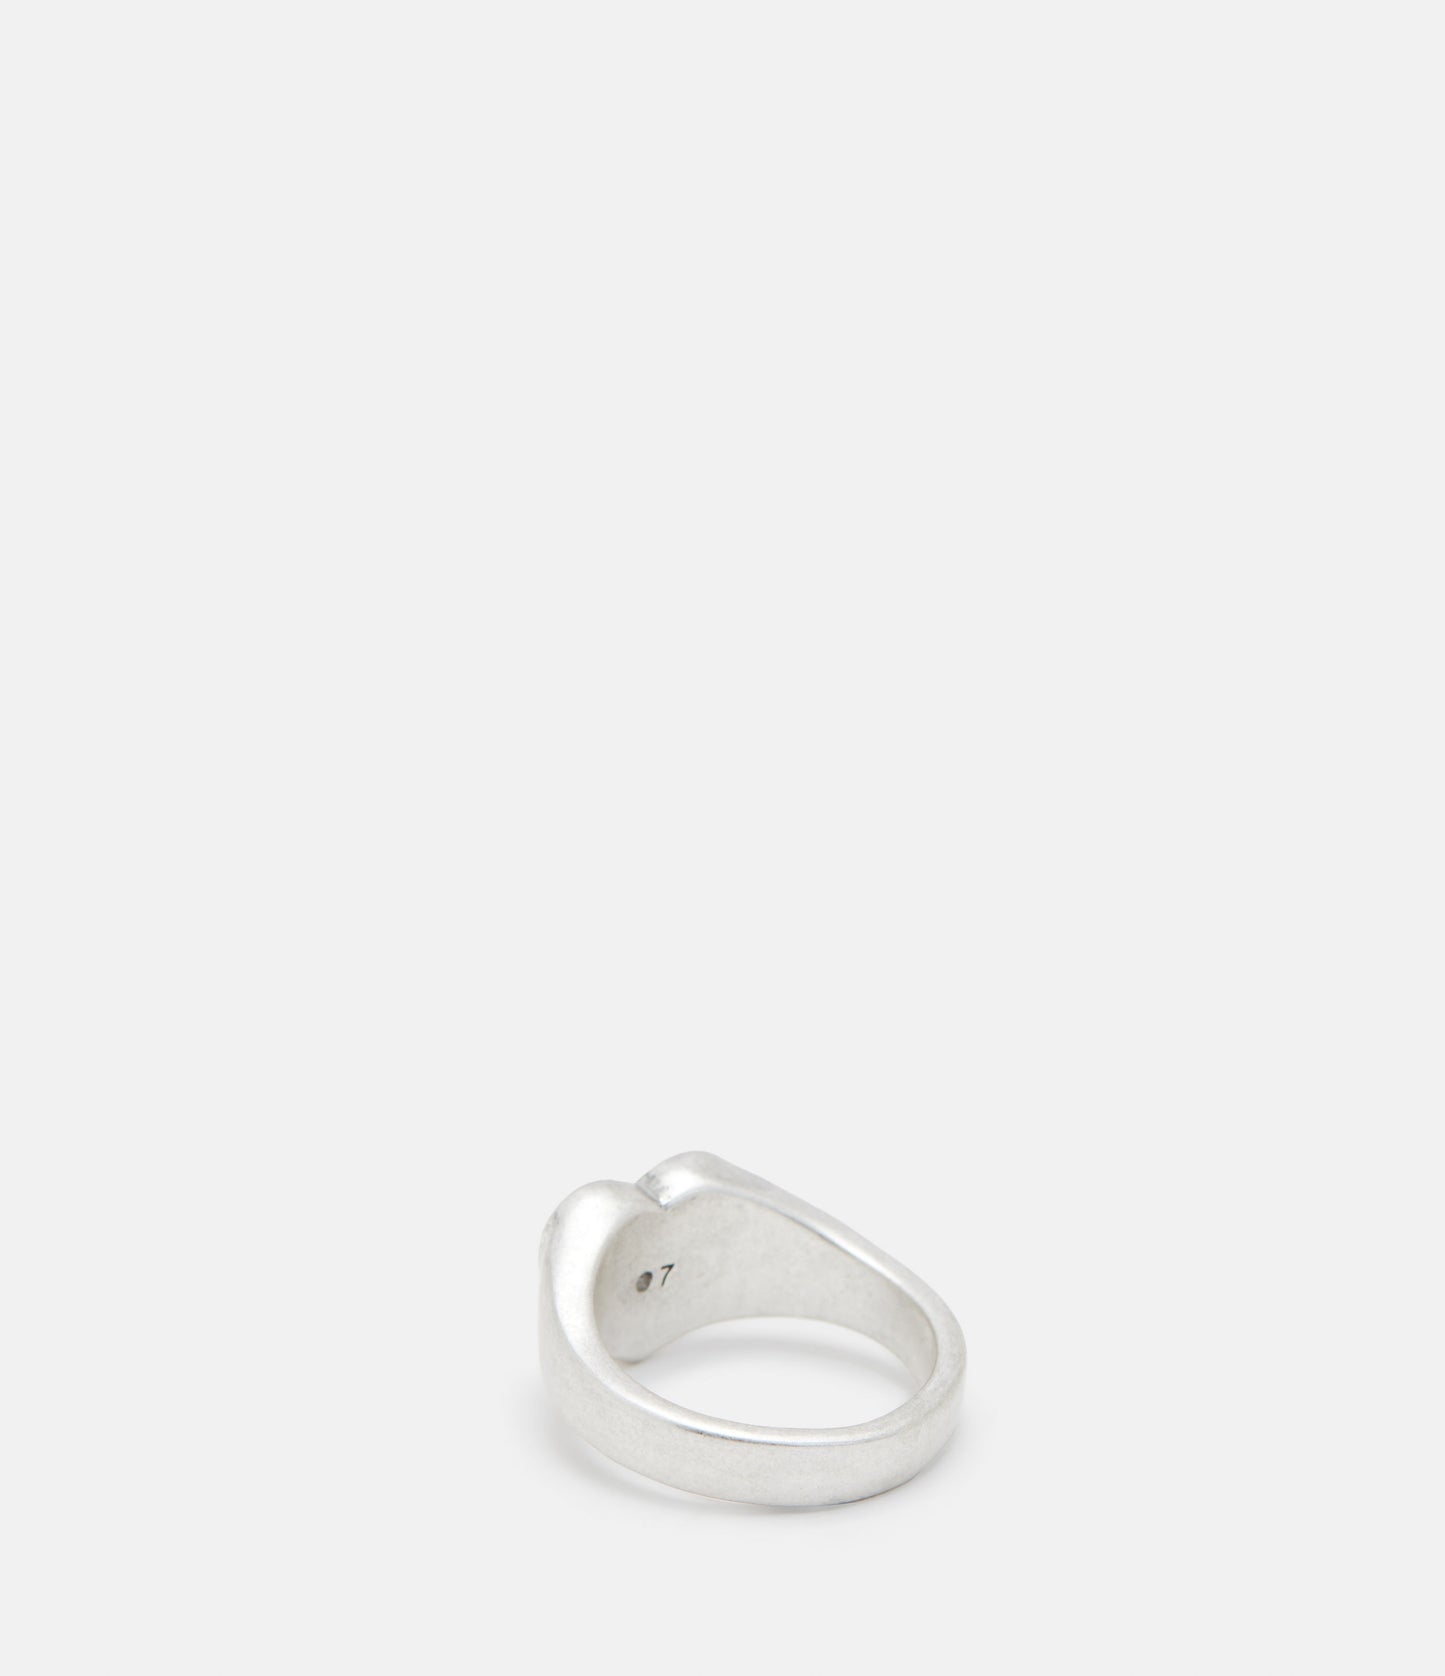 Obi Two Tone Heart Shaped Ring